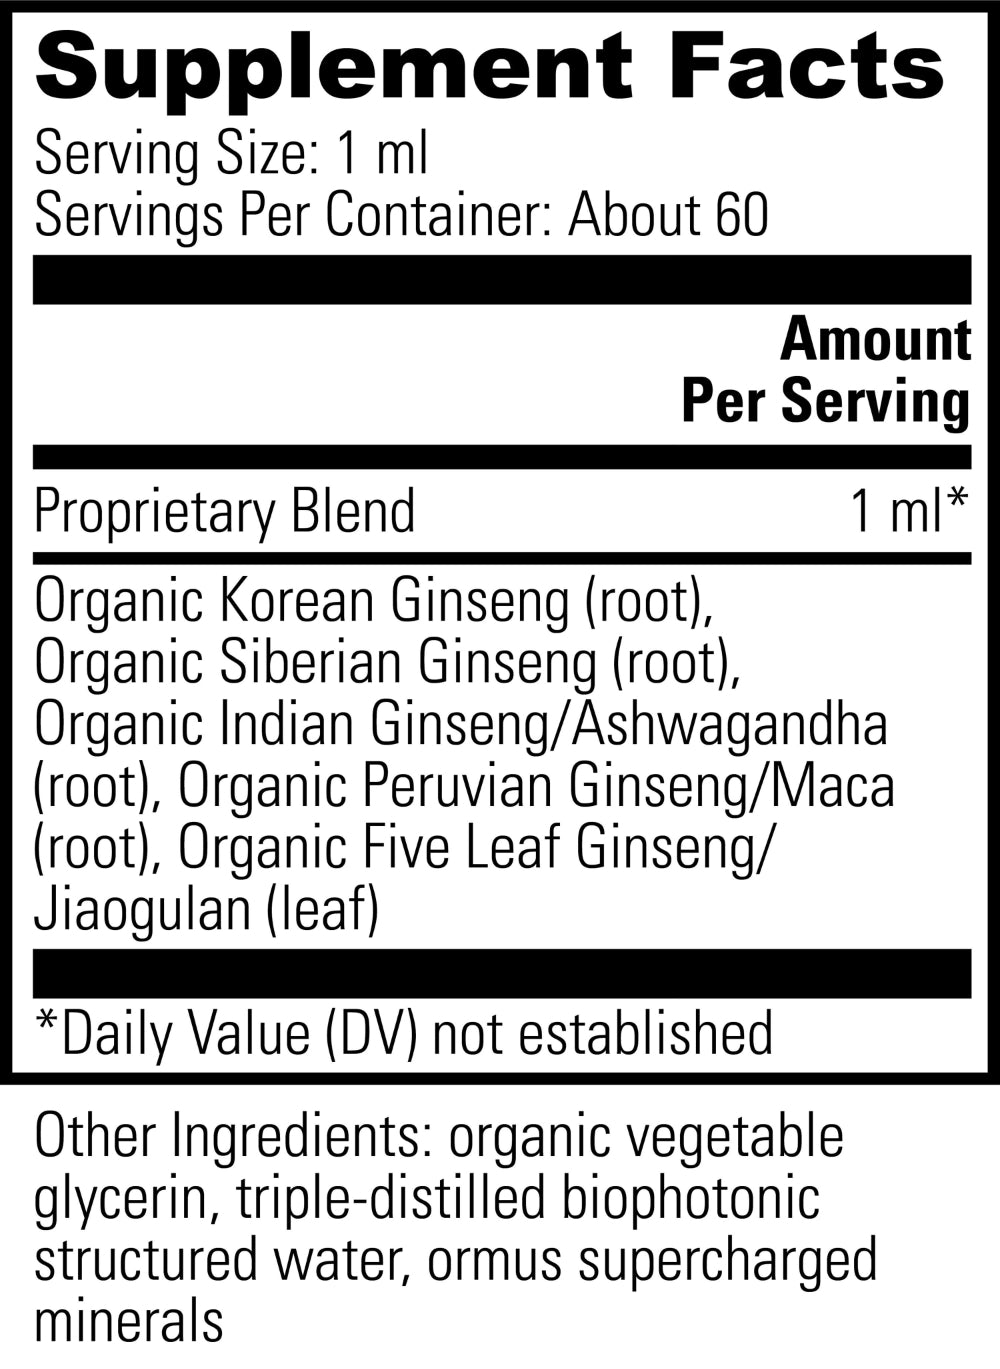 5 Ginseng Supplement Facts by Global Healing. Contains 5 strains - Organic Siberian Ginseng, Organic Indian Ginseng, Organic Peruvian 